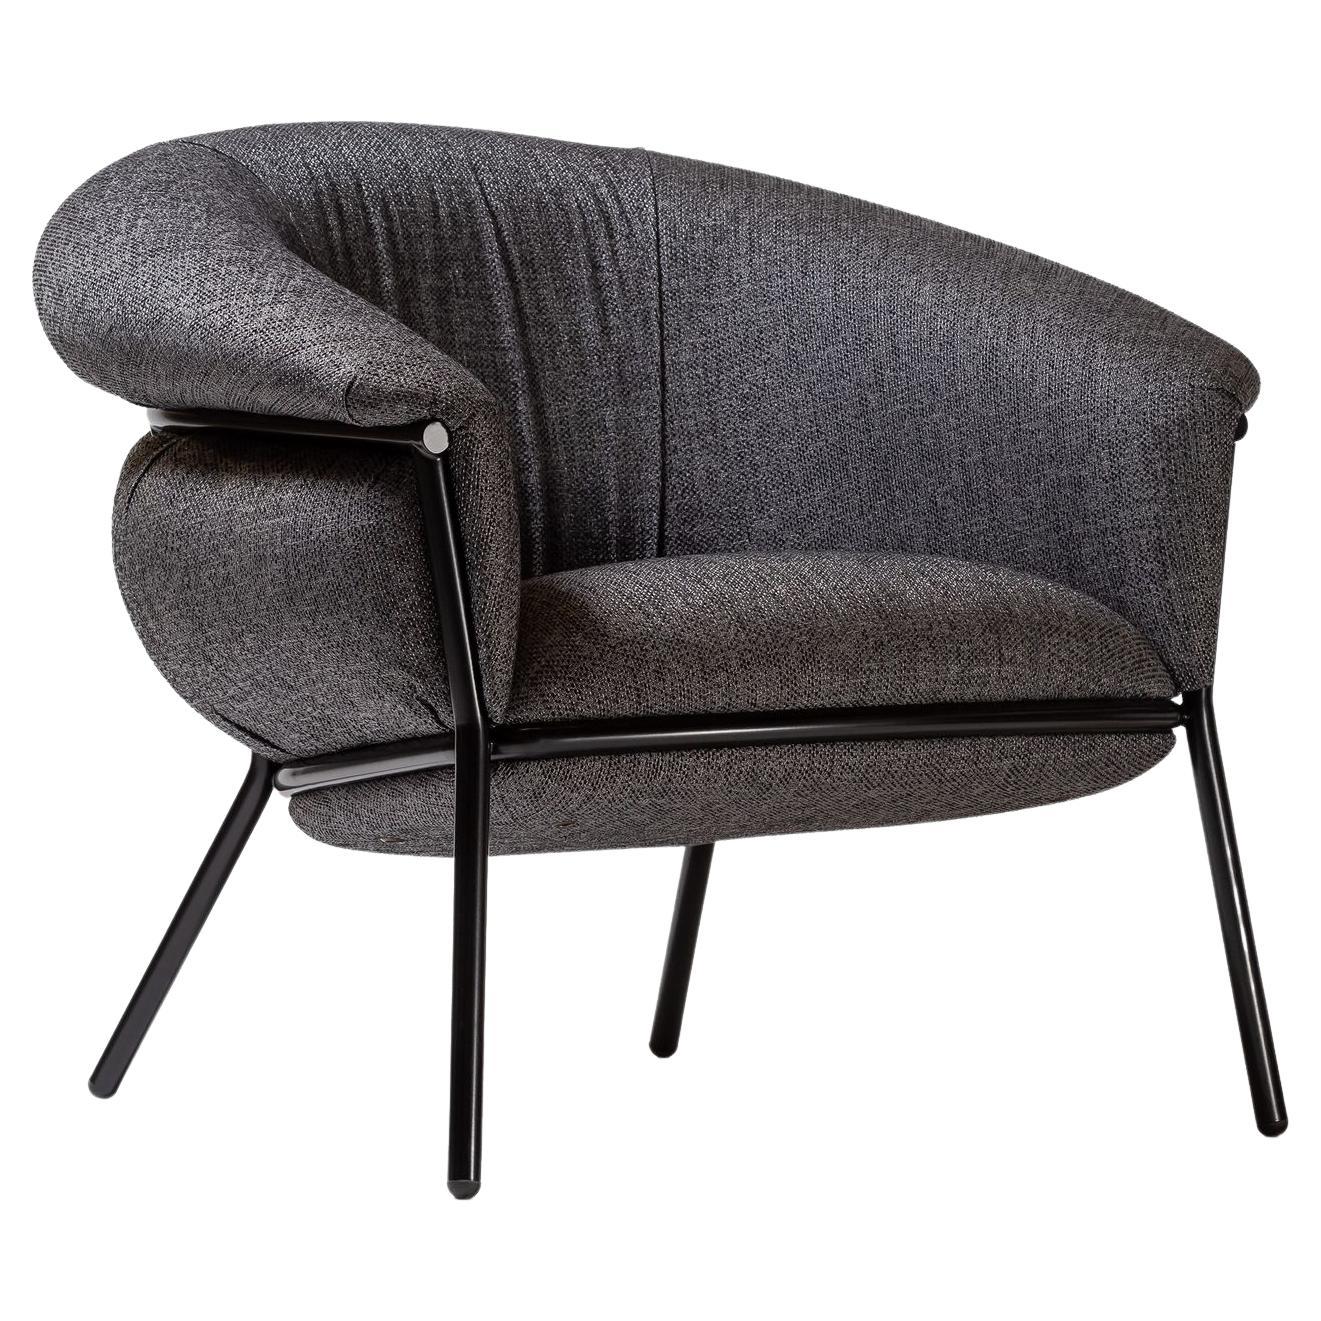 Stephen Burks fauteuil Grasso contemporain en tissu noir trou de serrure en vente